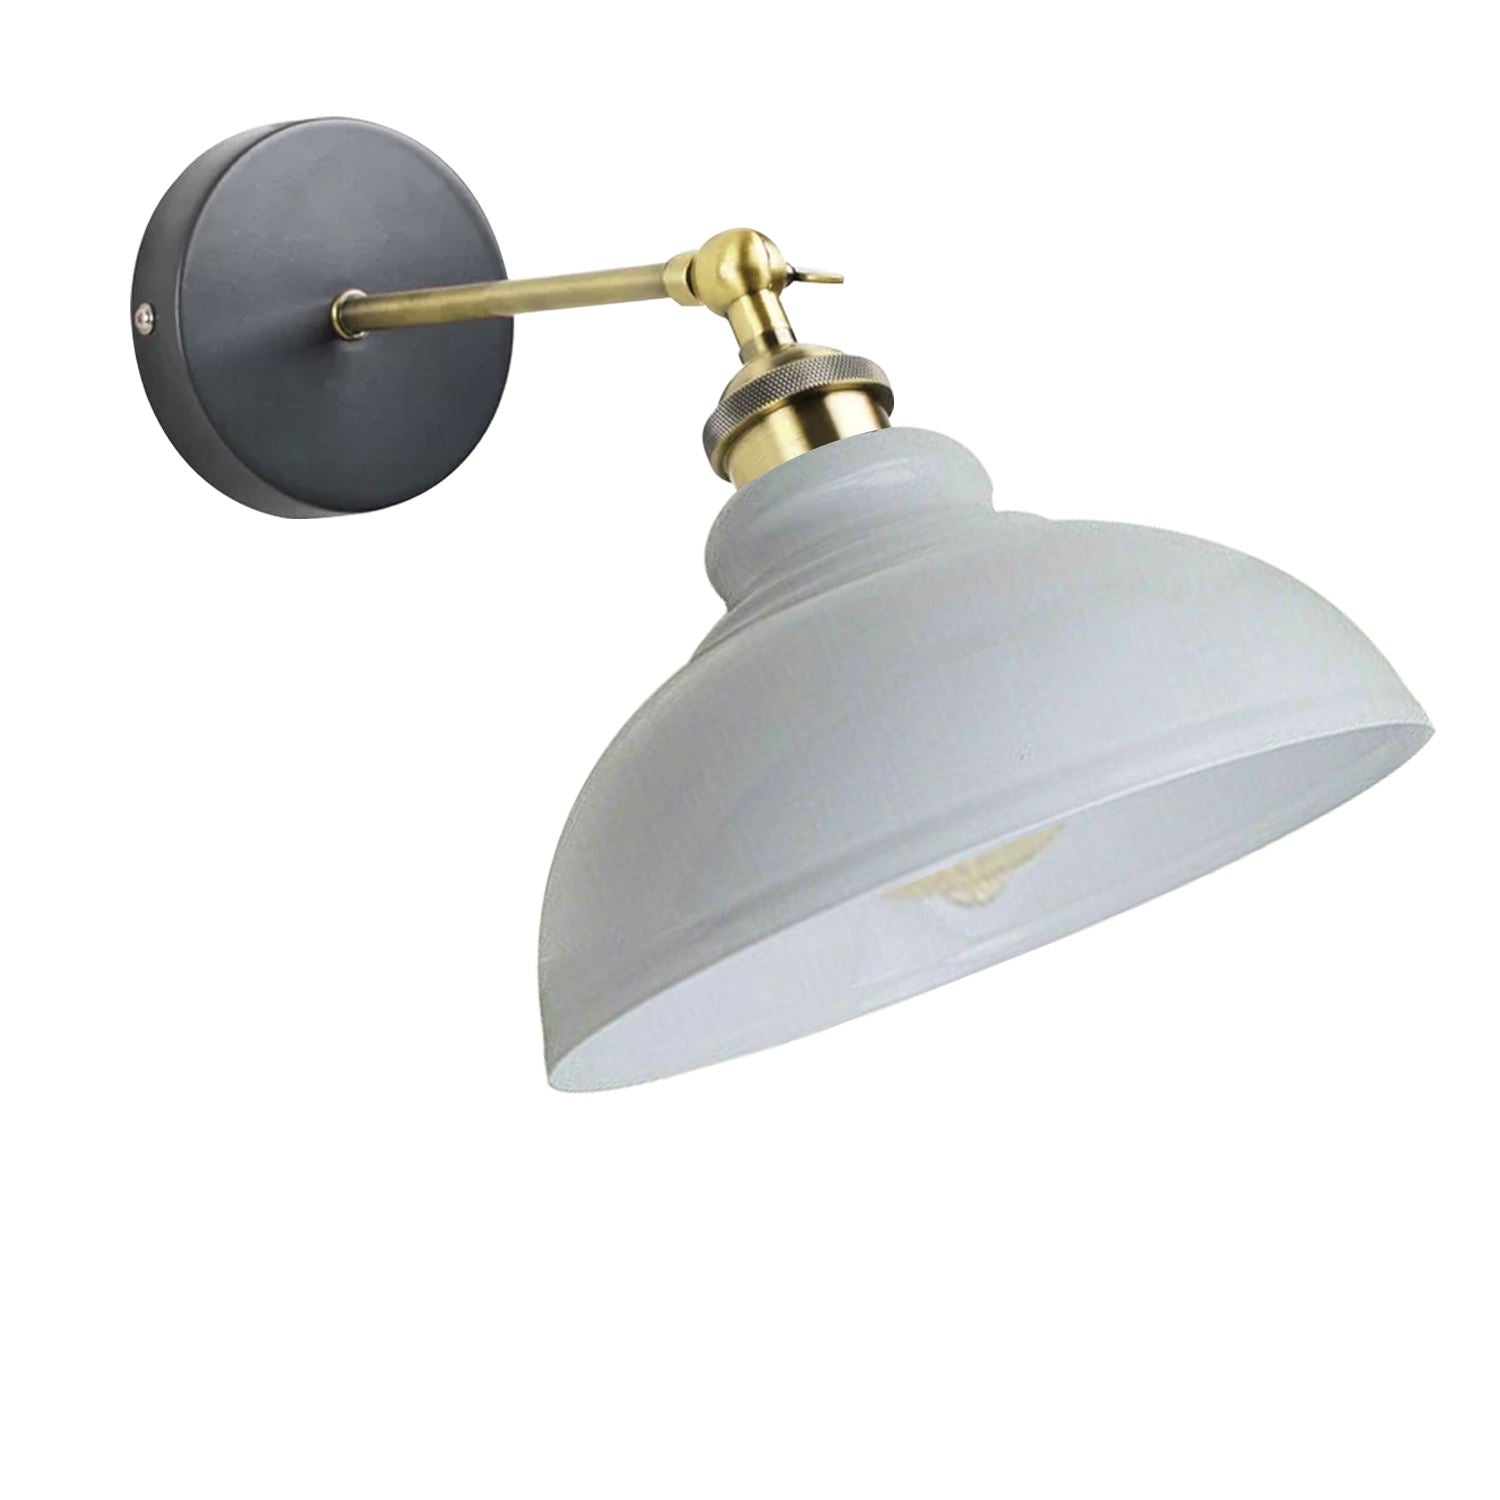 Modern Industrial Vintage Retro Loft Sconce Wall Light Lamp Fitting Fixture UK~1220 - LEDSone UK Ltd